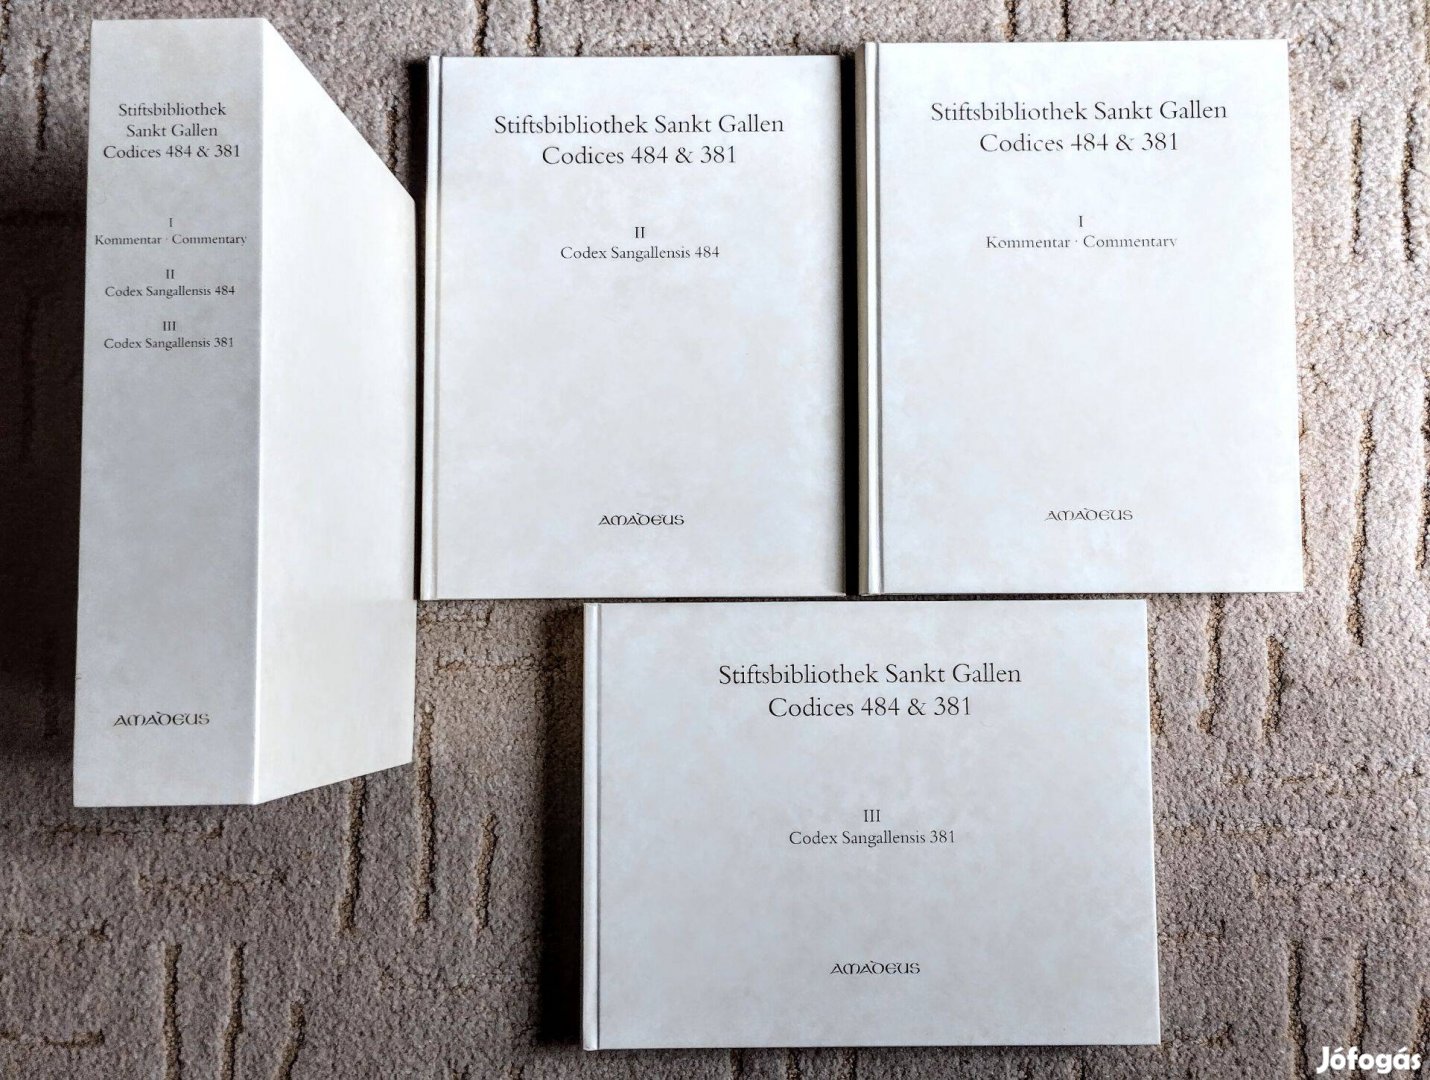 Codices 484 & 381 - kódex hasonmás reprint fakszimile faksimile